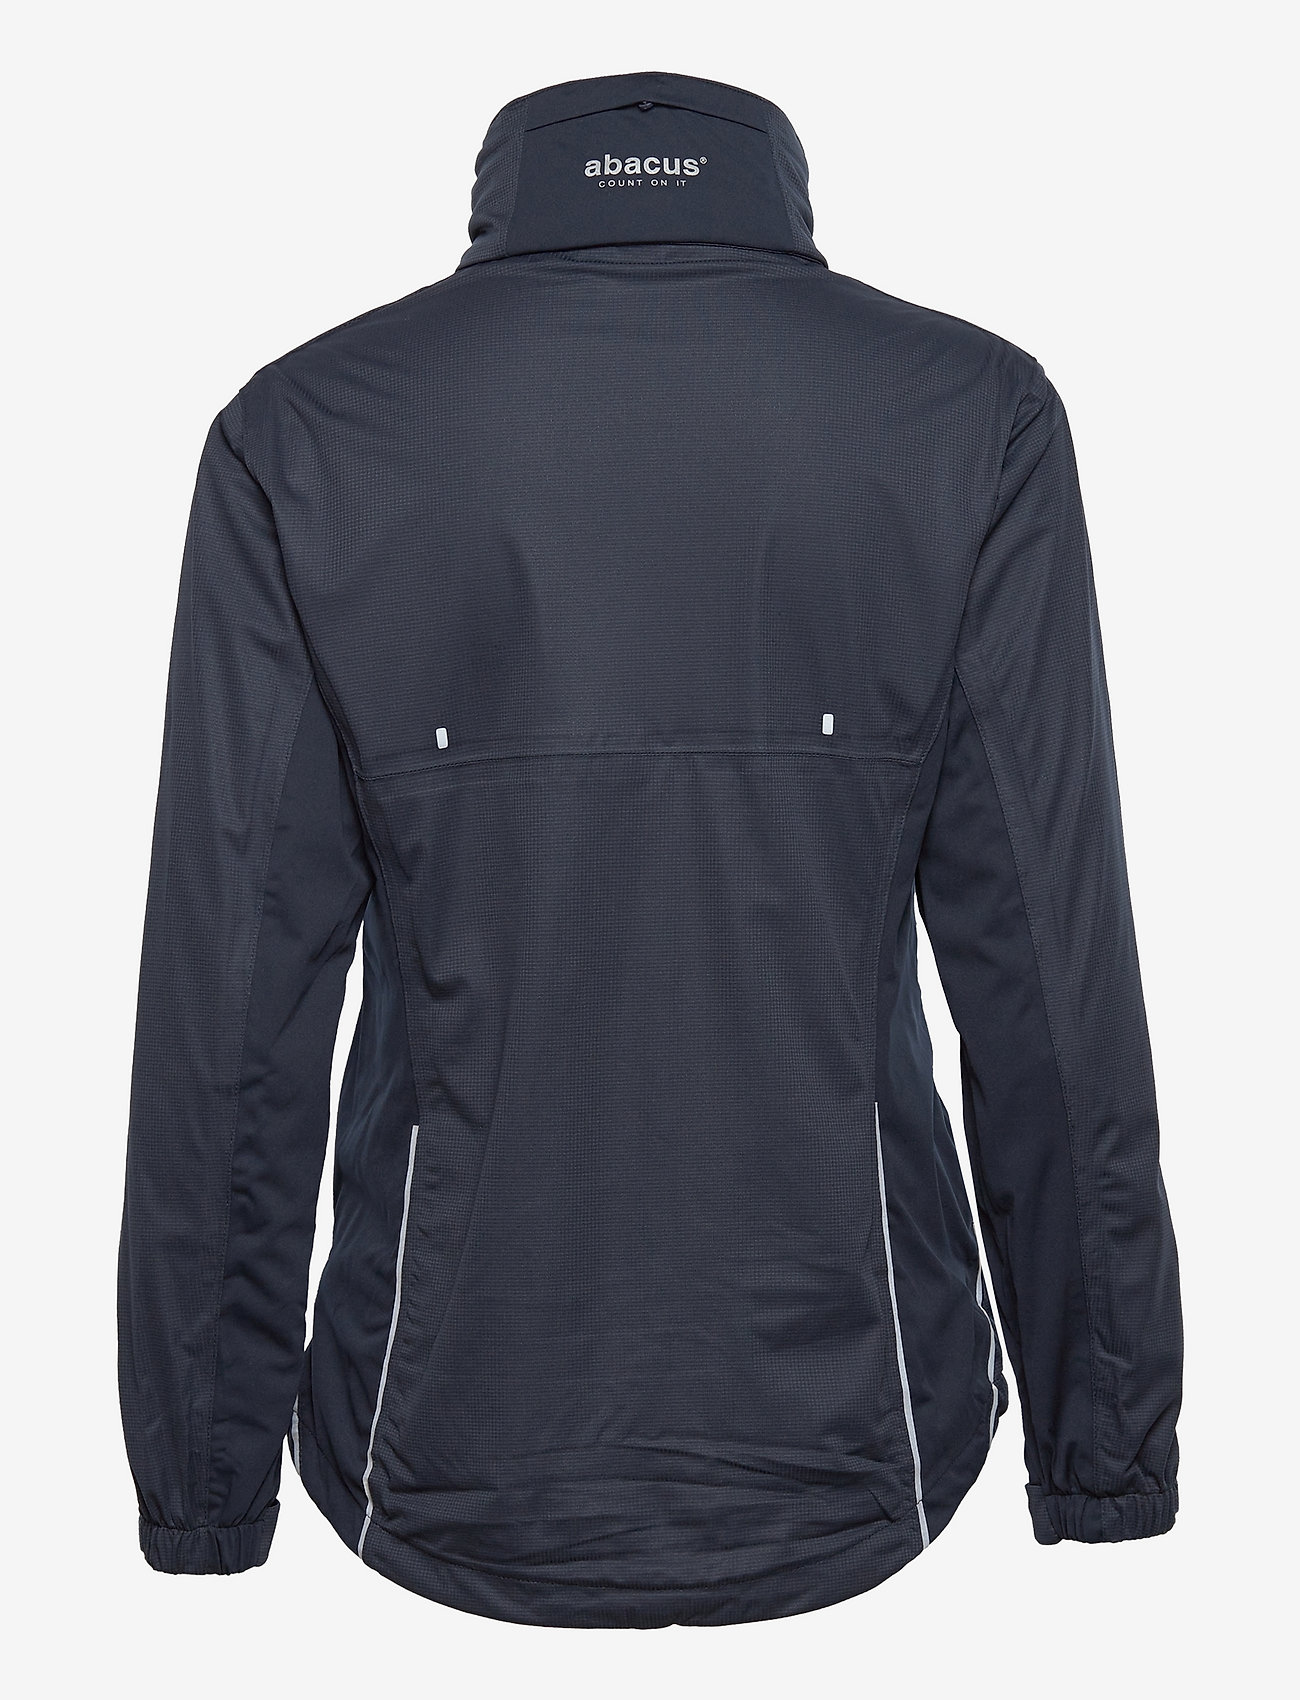 Abacus - Lds Swinley rainjacket - golf jackets - navy - 1